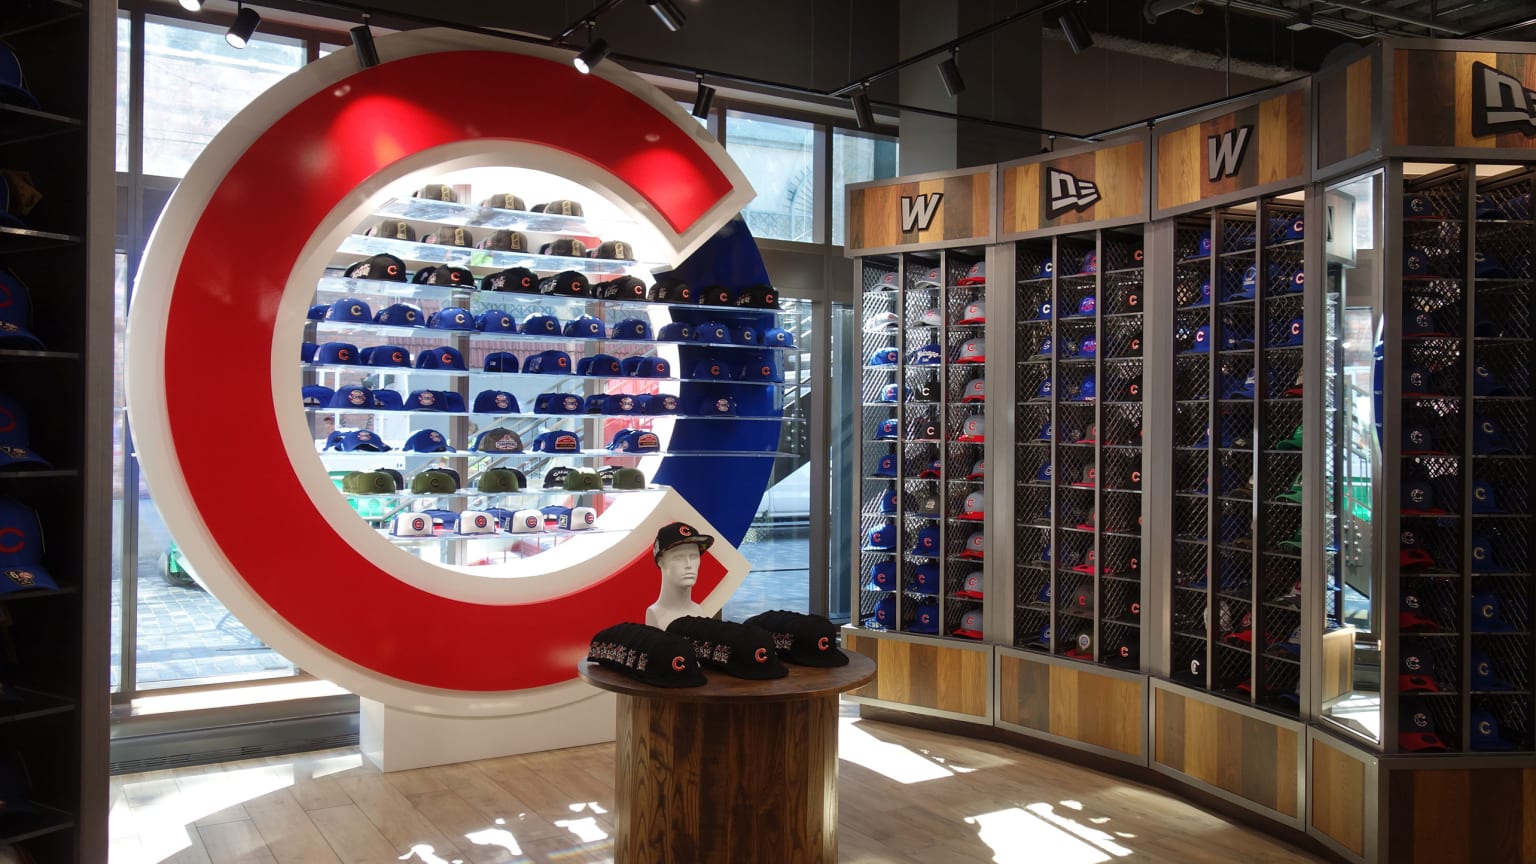 Photos: New Chicago Cubs Merchandise Store Opens Near Wrigley Field - CBS  Chicago